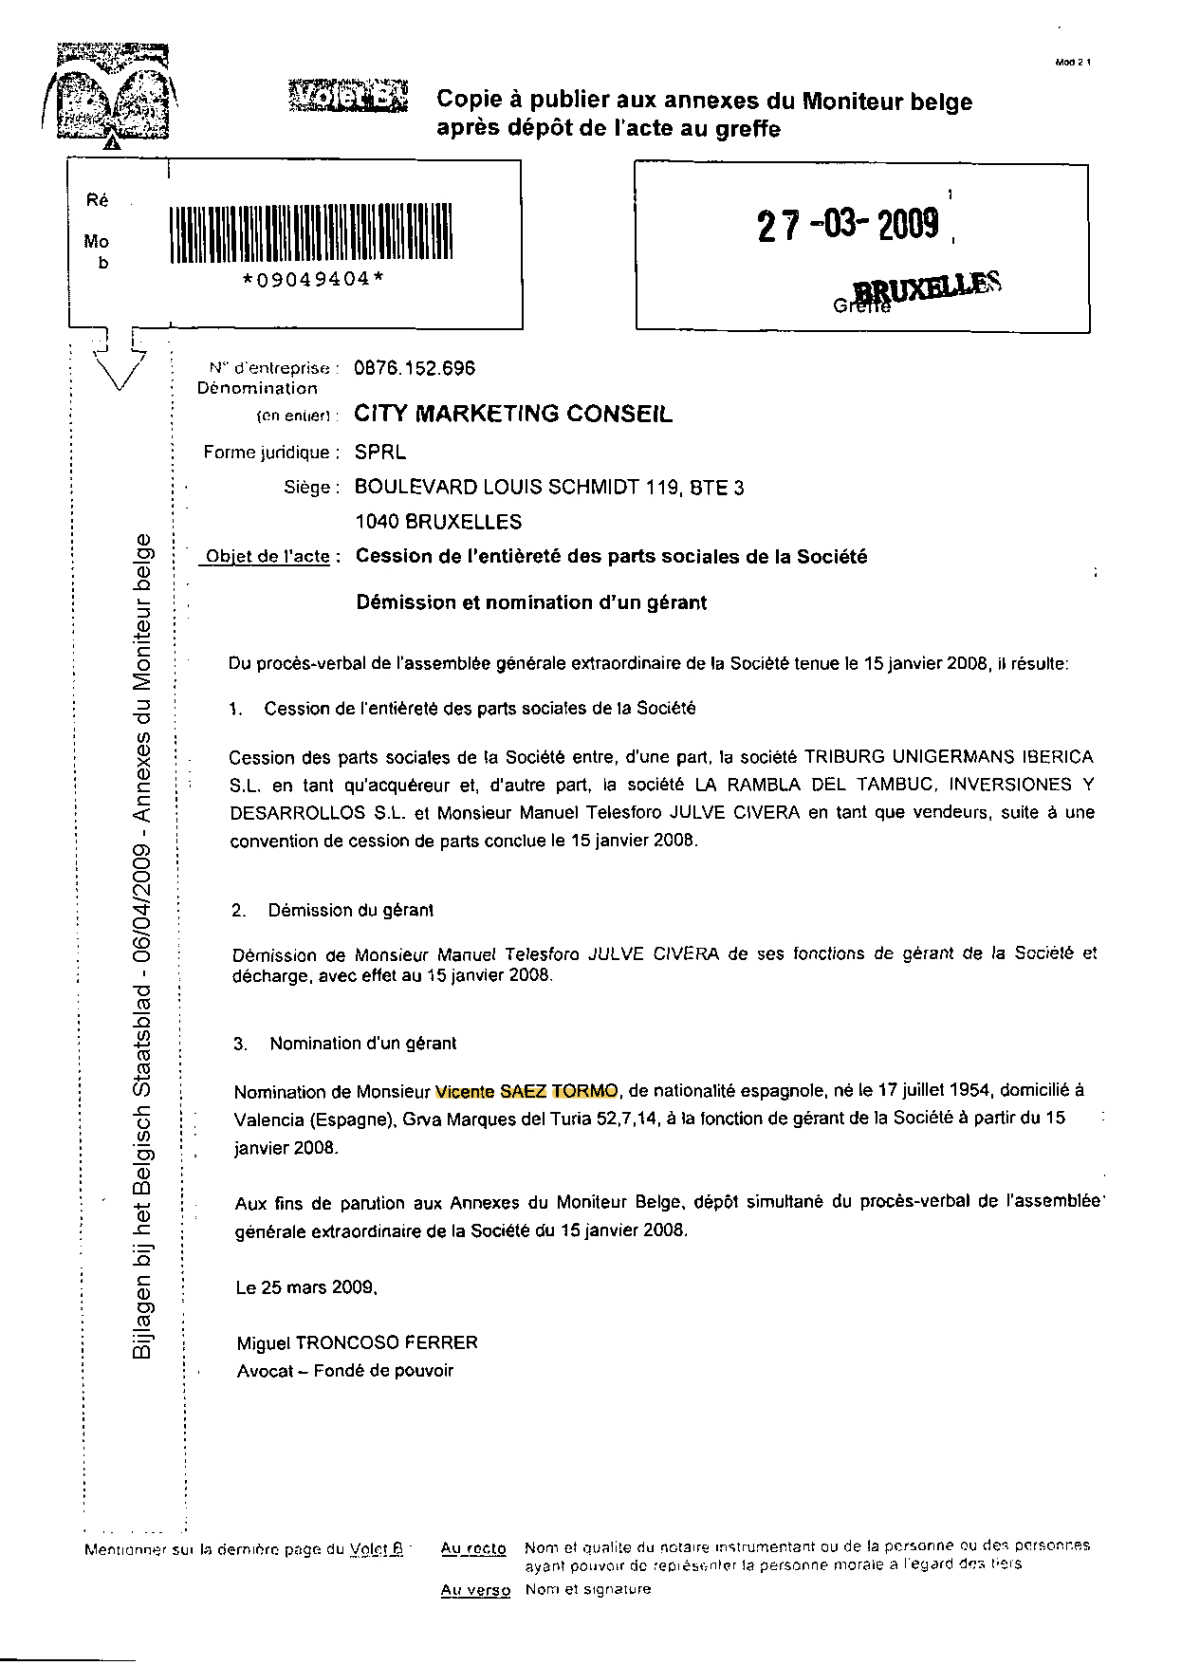 Documento que acredita que Sáez Tormo era dueño de la empresa belga.